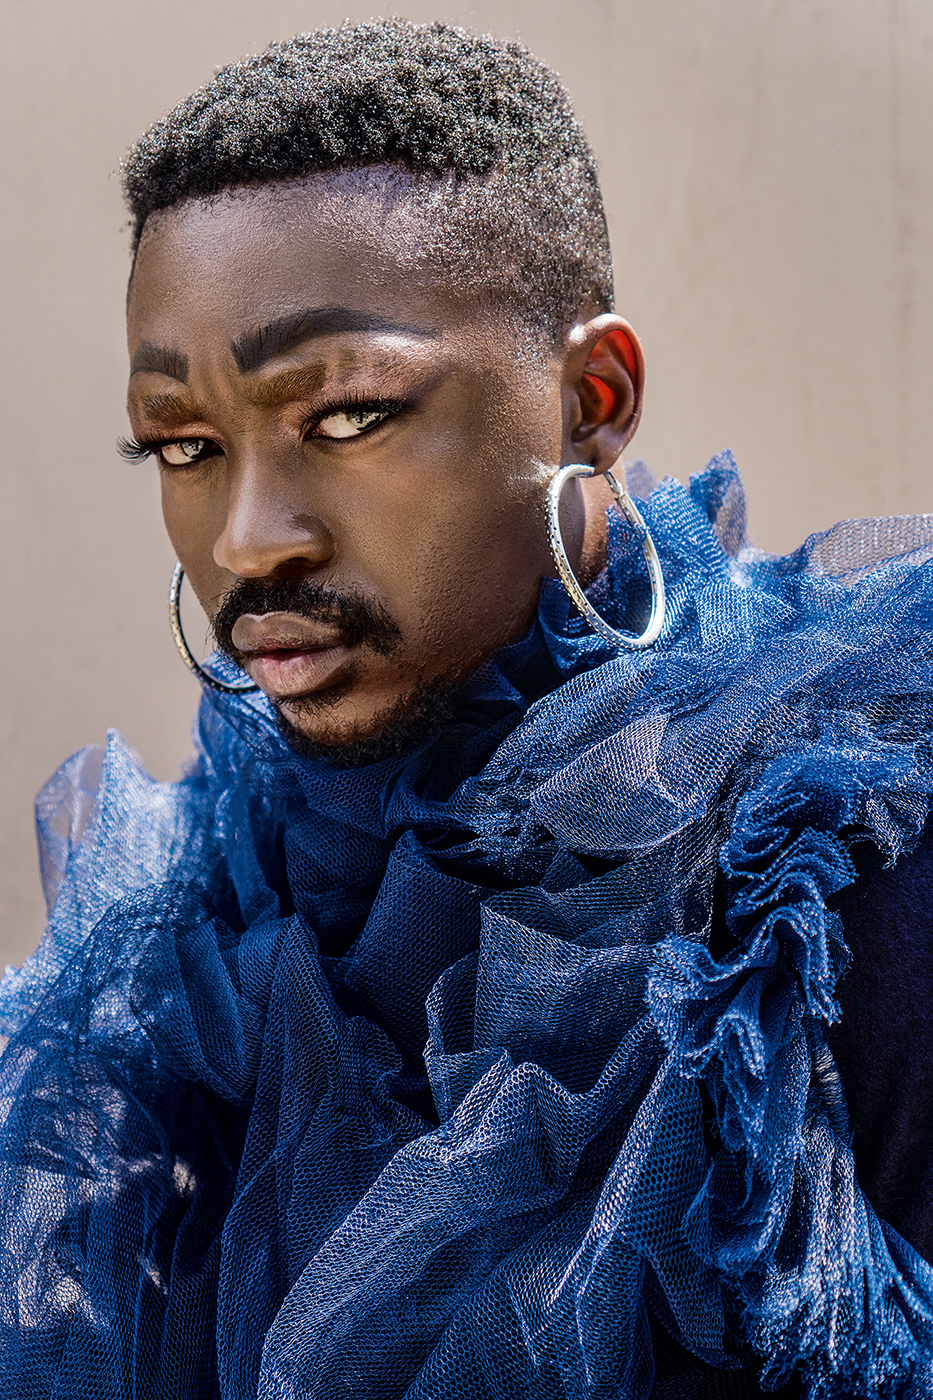  Jamal Nxedlana, FAKA Portrait, Johannesburg, 2019. Courtesy the artist 